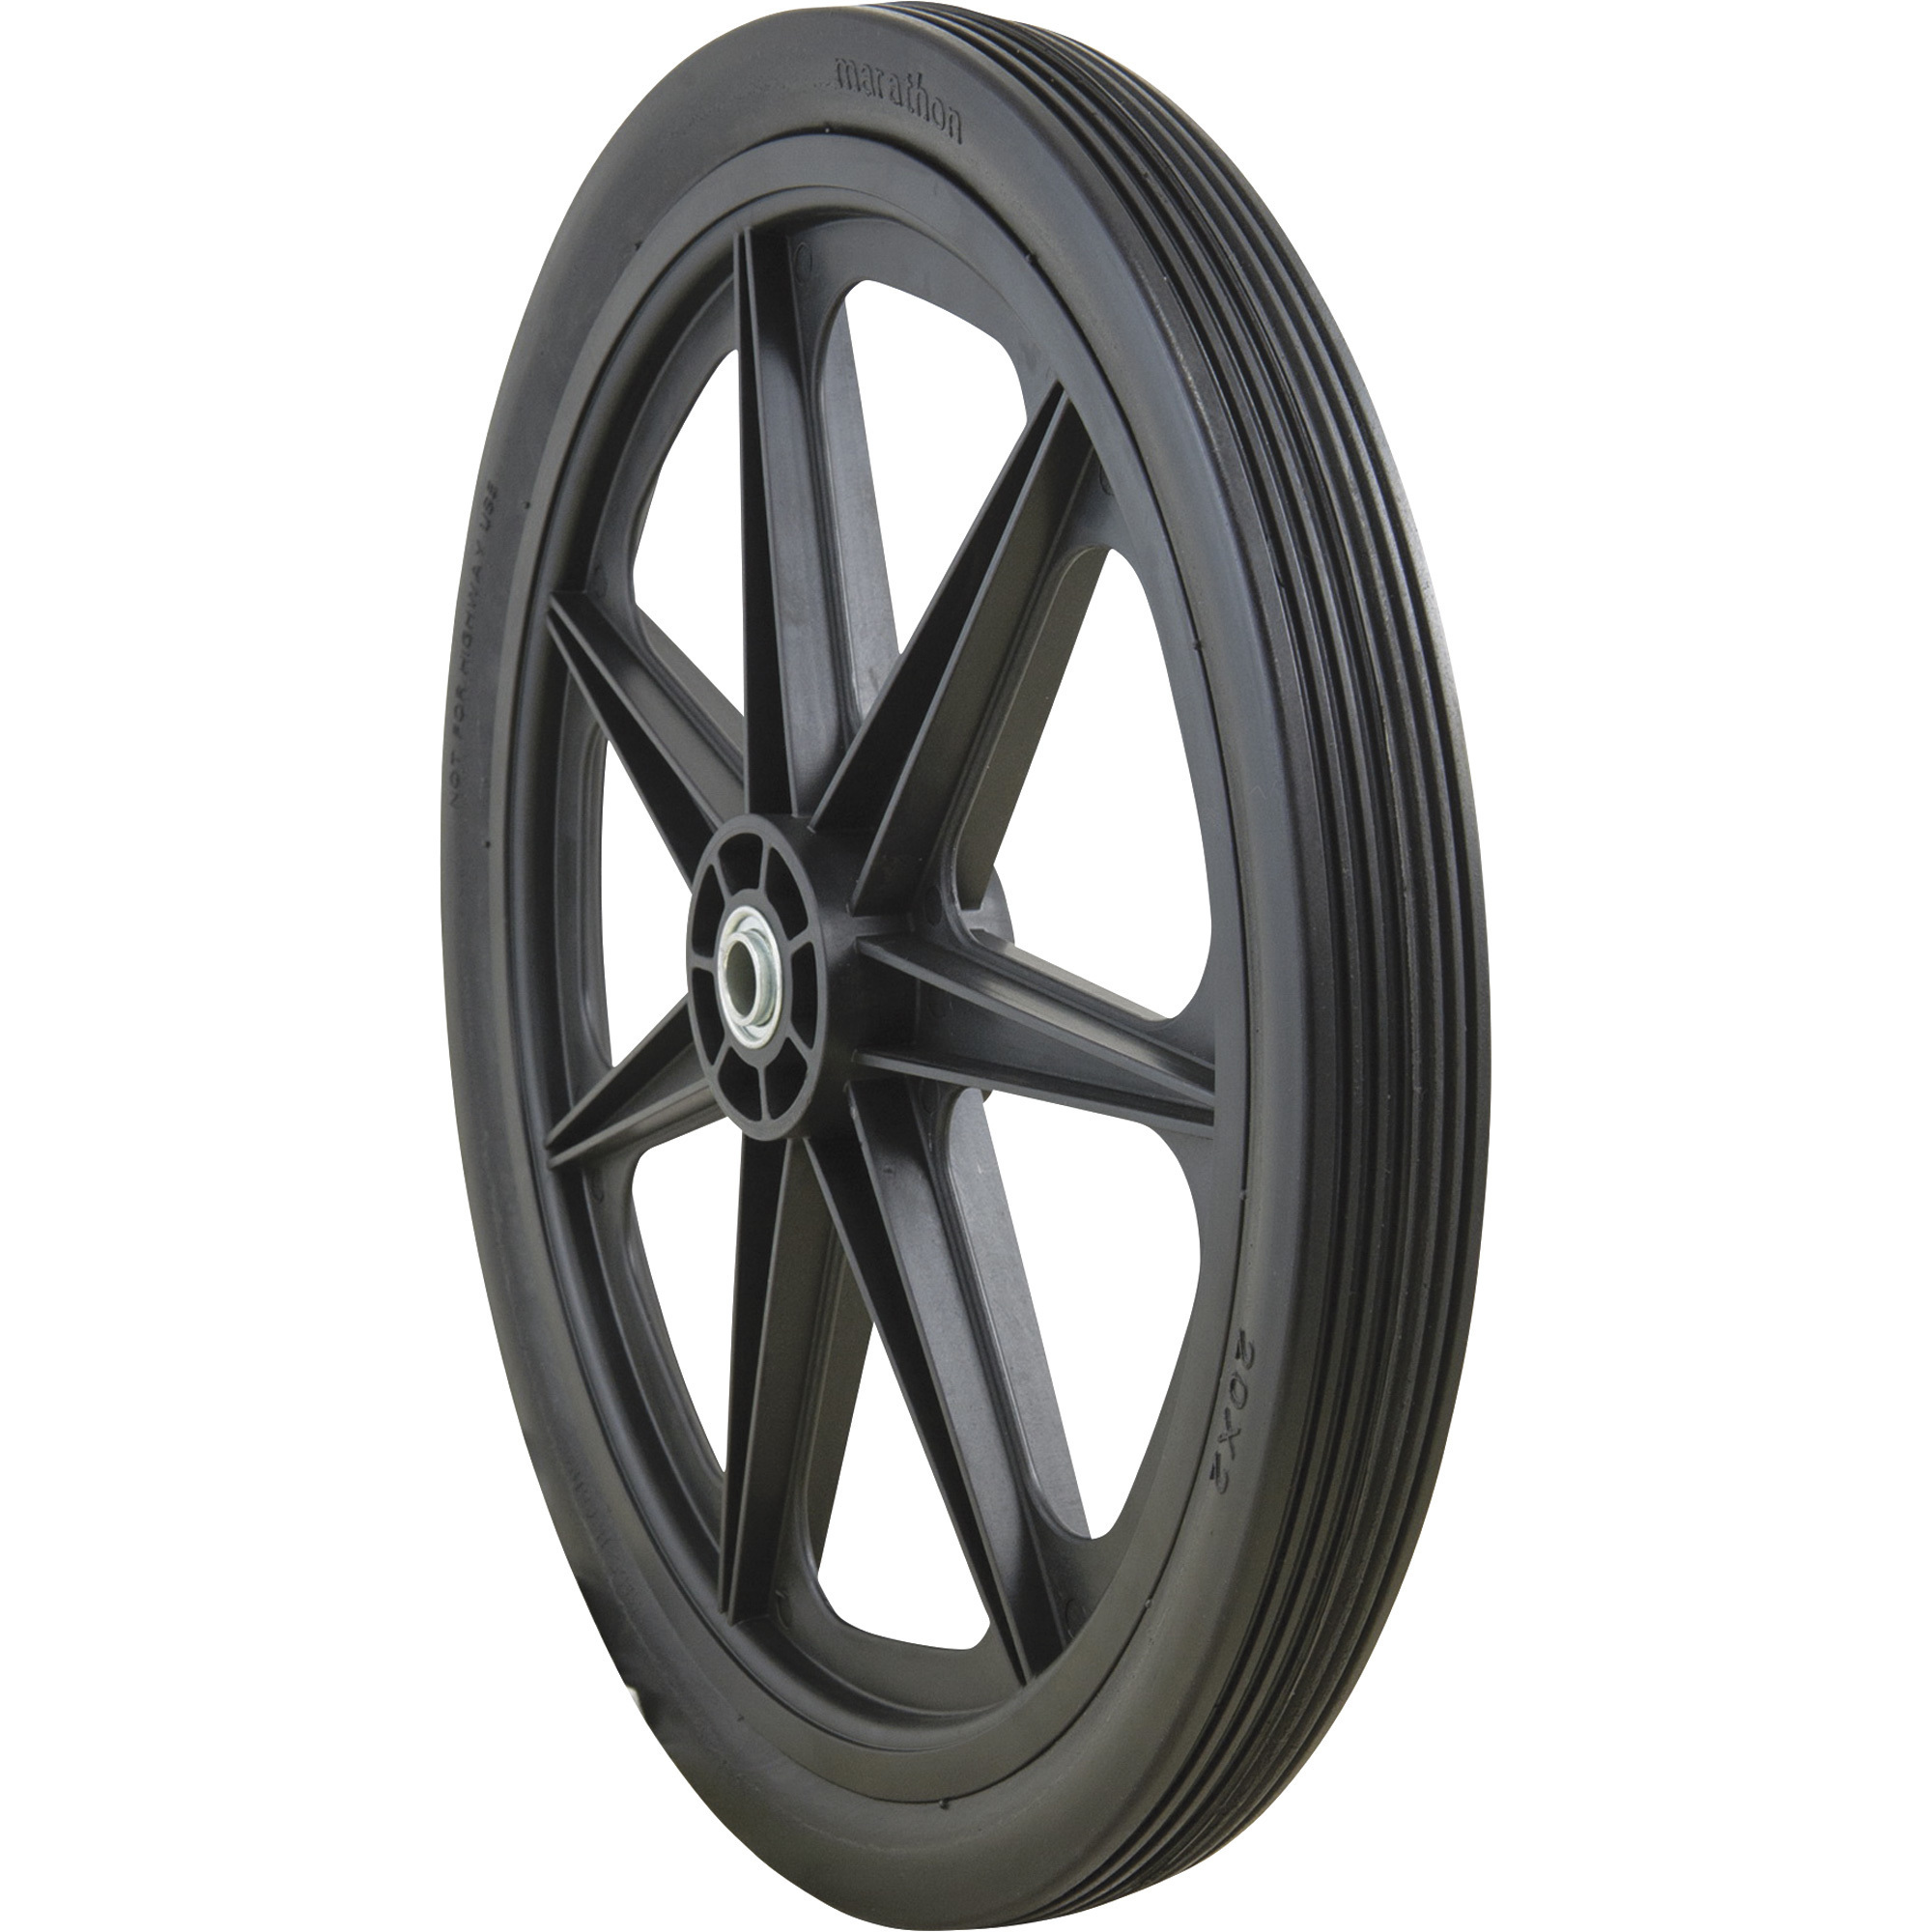 Marathon Tires Flat-Free Tire on Plastic Spoke Rim â 3/4Inch Bore, 20 x 2.0Inch